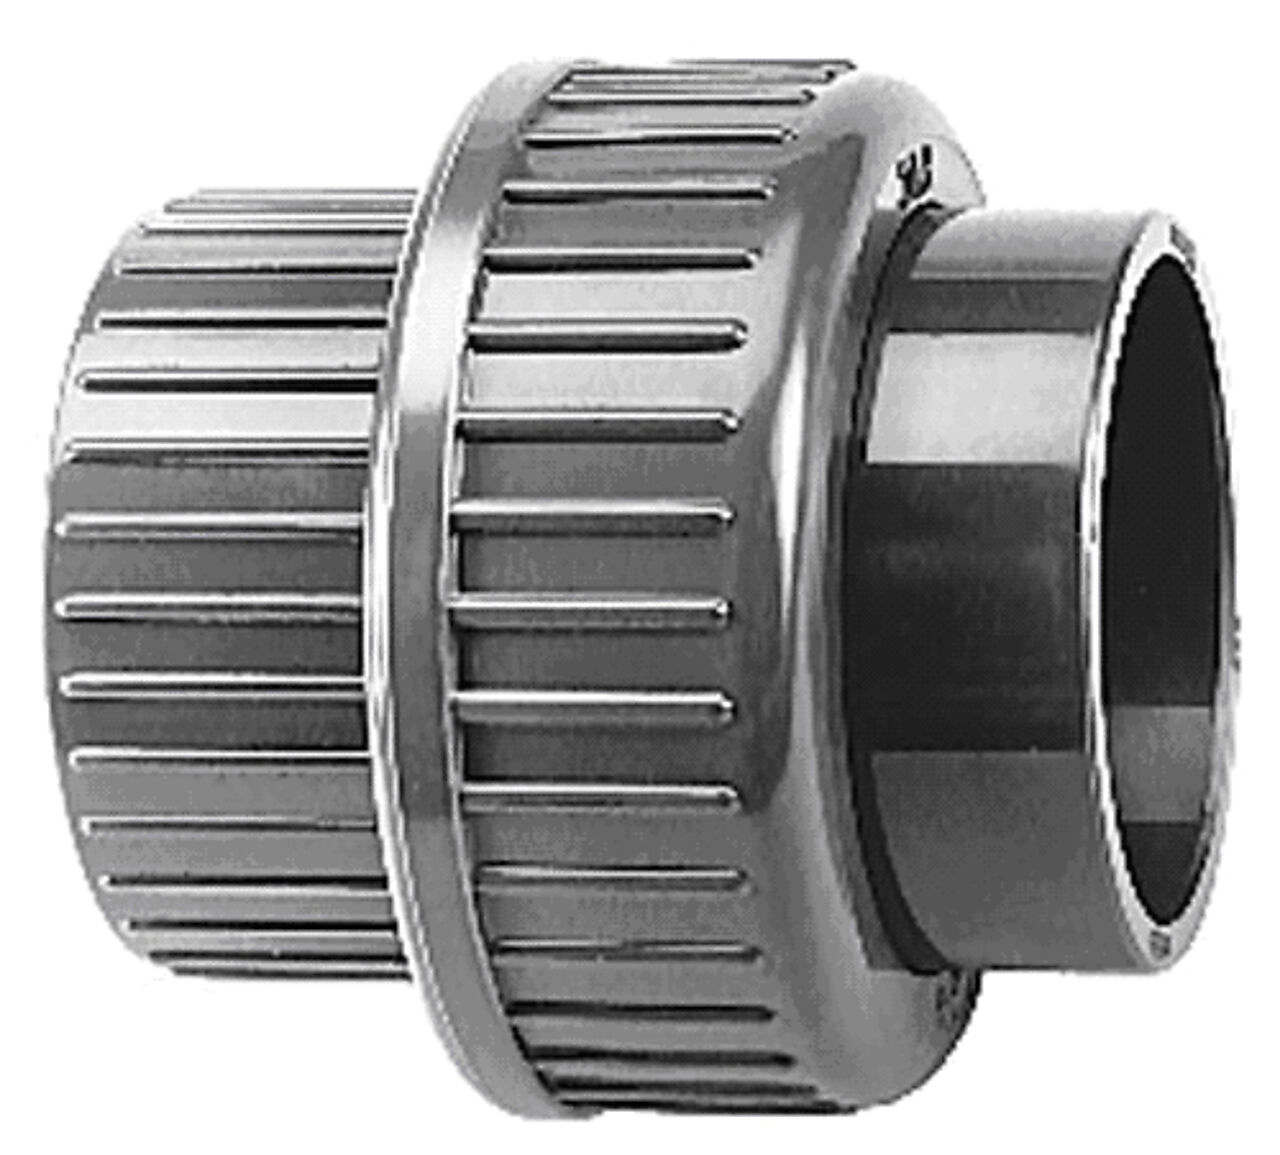 Georg Fischer Union PVC-U 40 mm, metrisk, PN16, EPDM O-ring, leverandørnr. 721 510 109 1